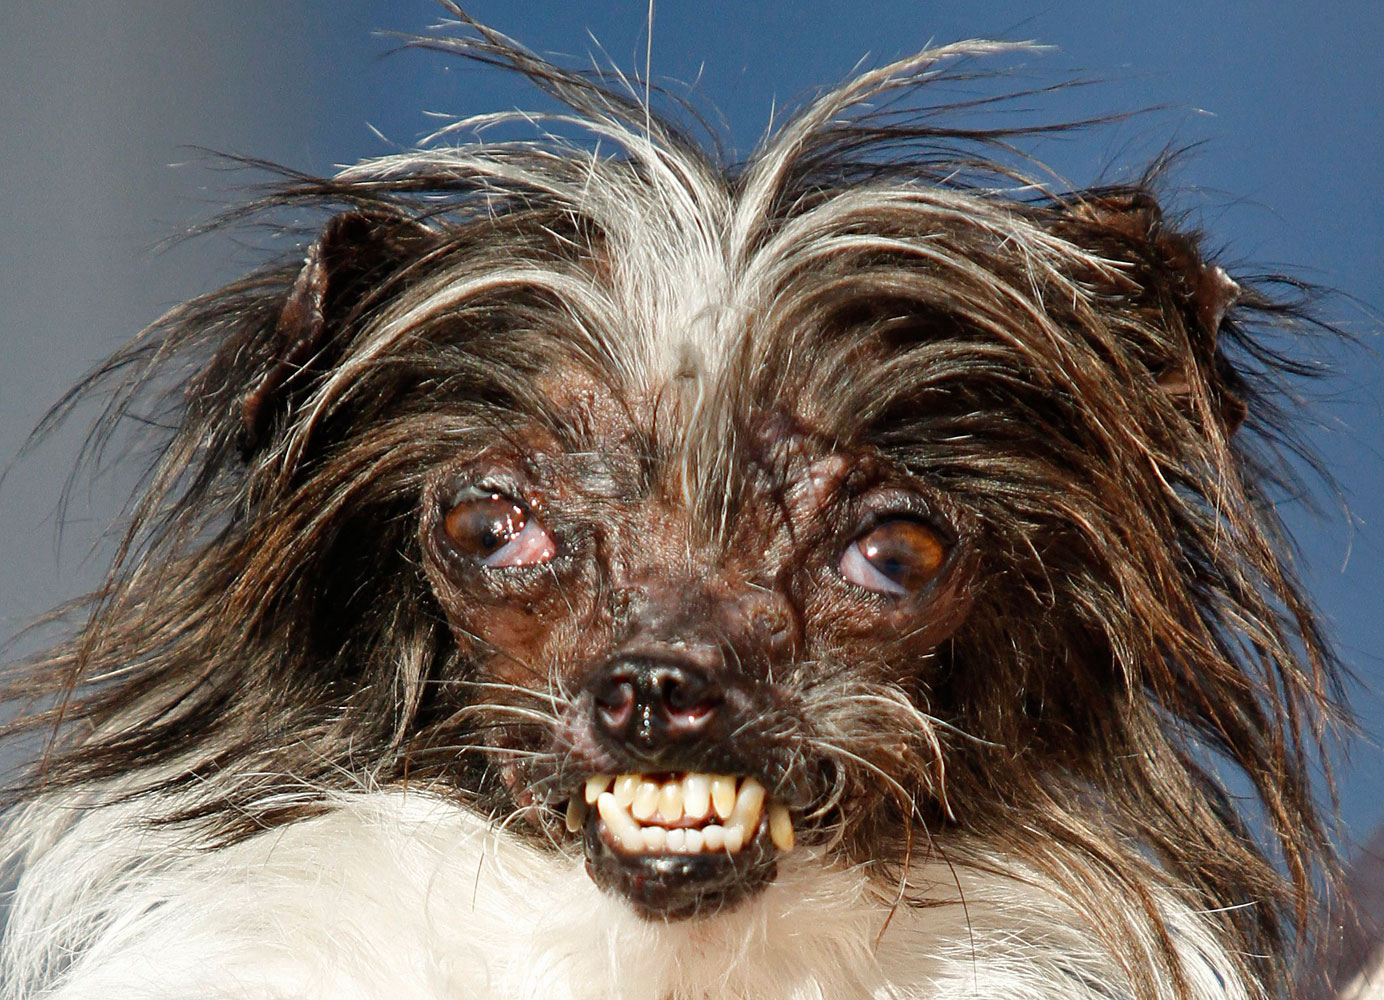 Jimmy Kimmel Live: World's Ugliest Dog Peanut Gets a Makeover | Time